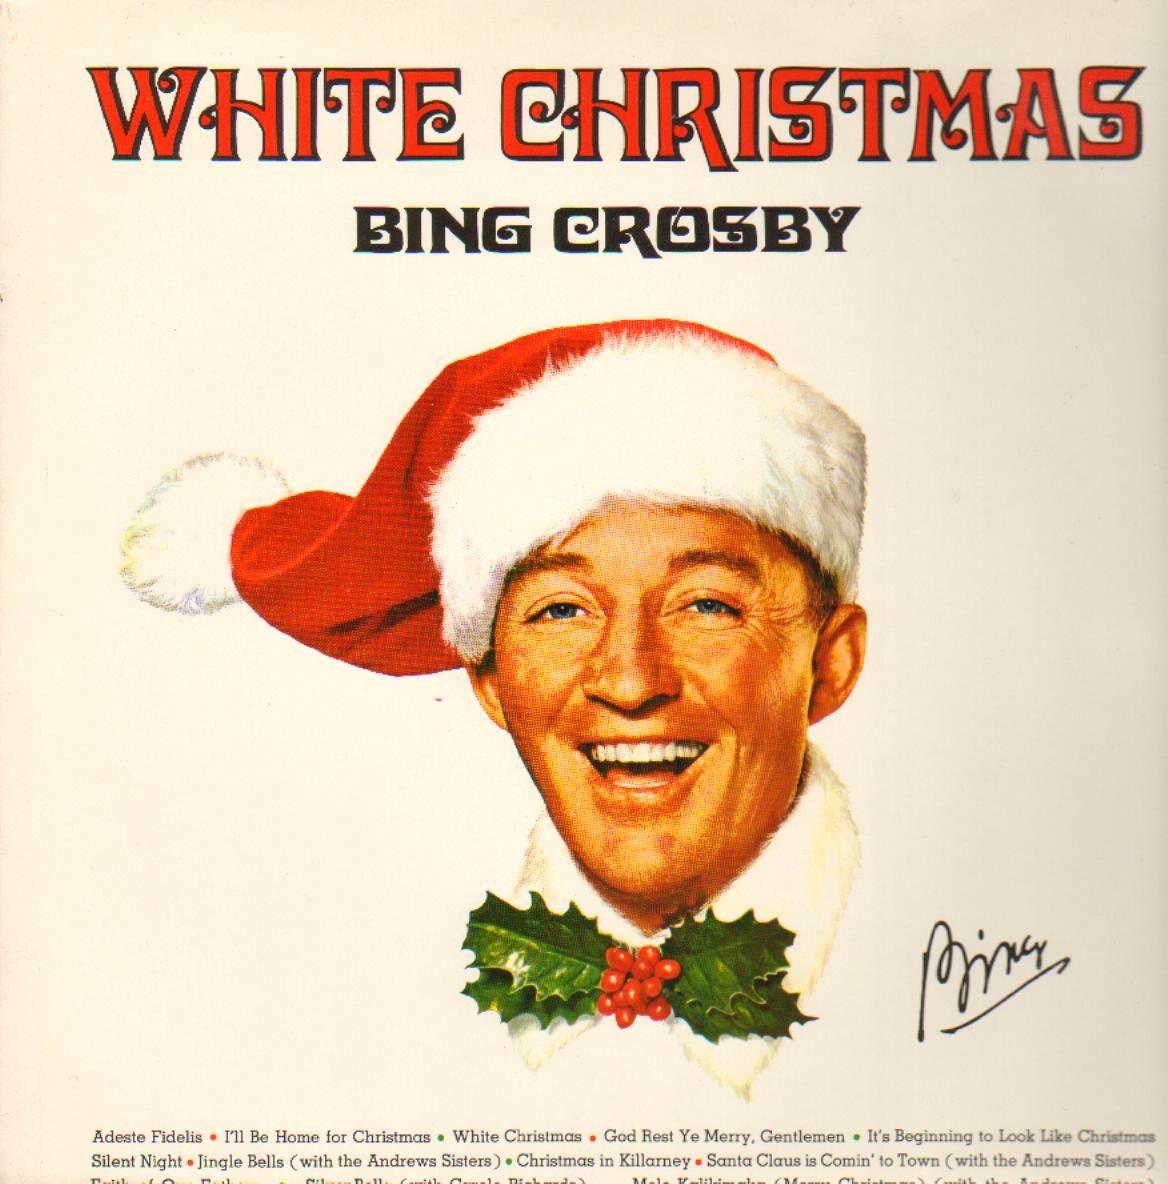 بینگ کرازبی (Bing Crosby)